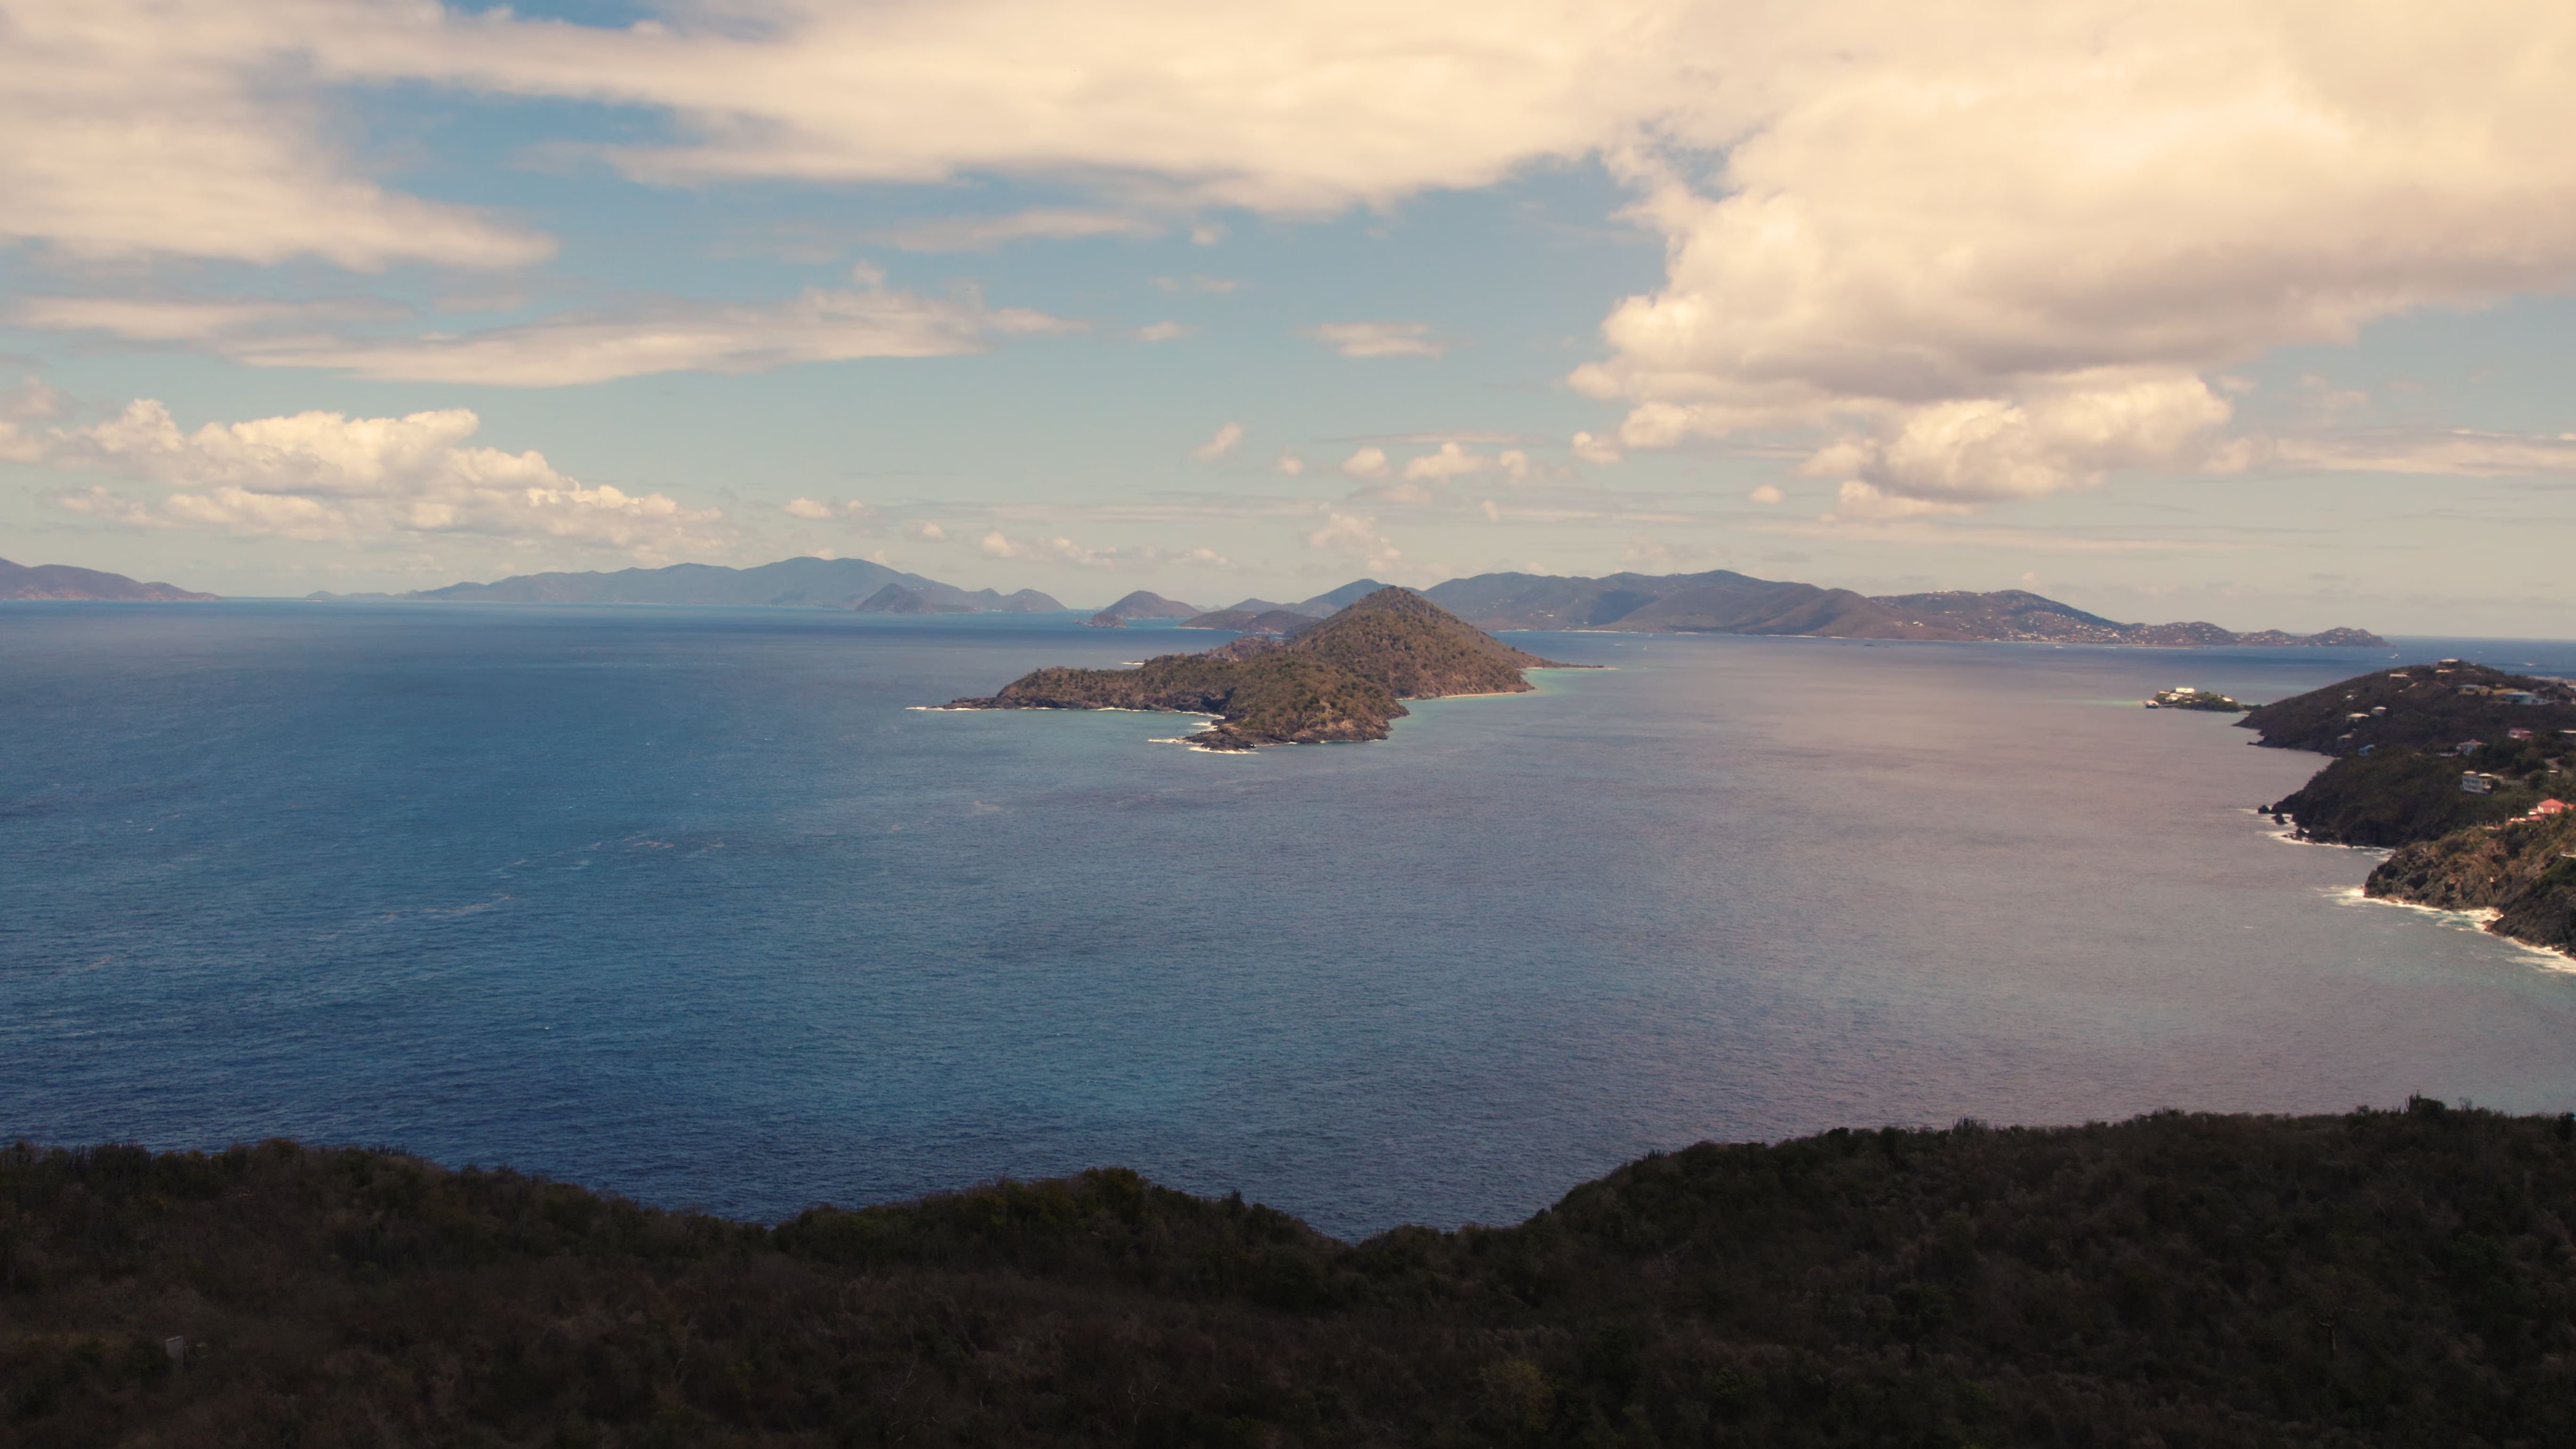 Ocean views of the British Virgin Islands